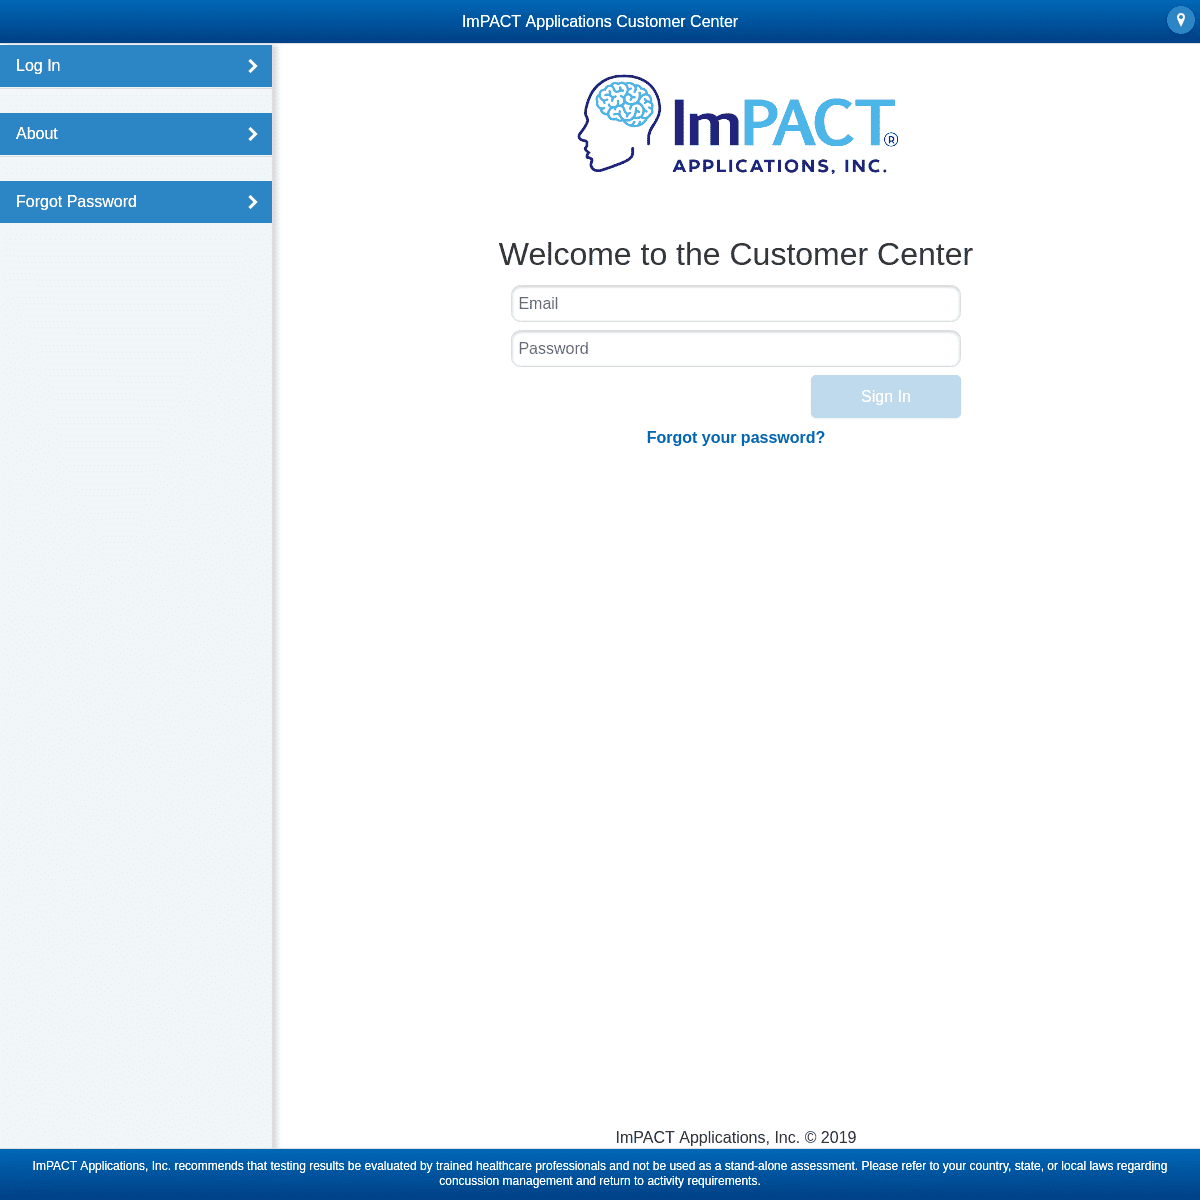 A complete backup of impacttestonline.com